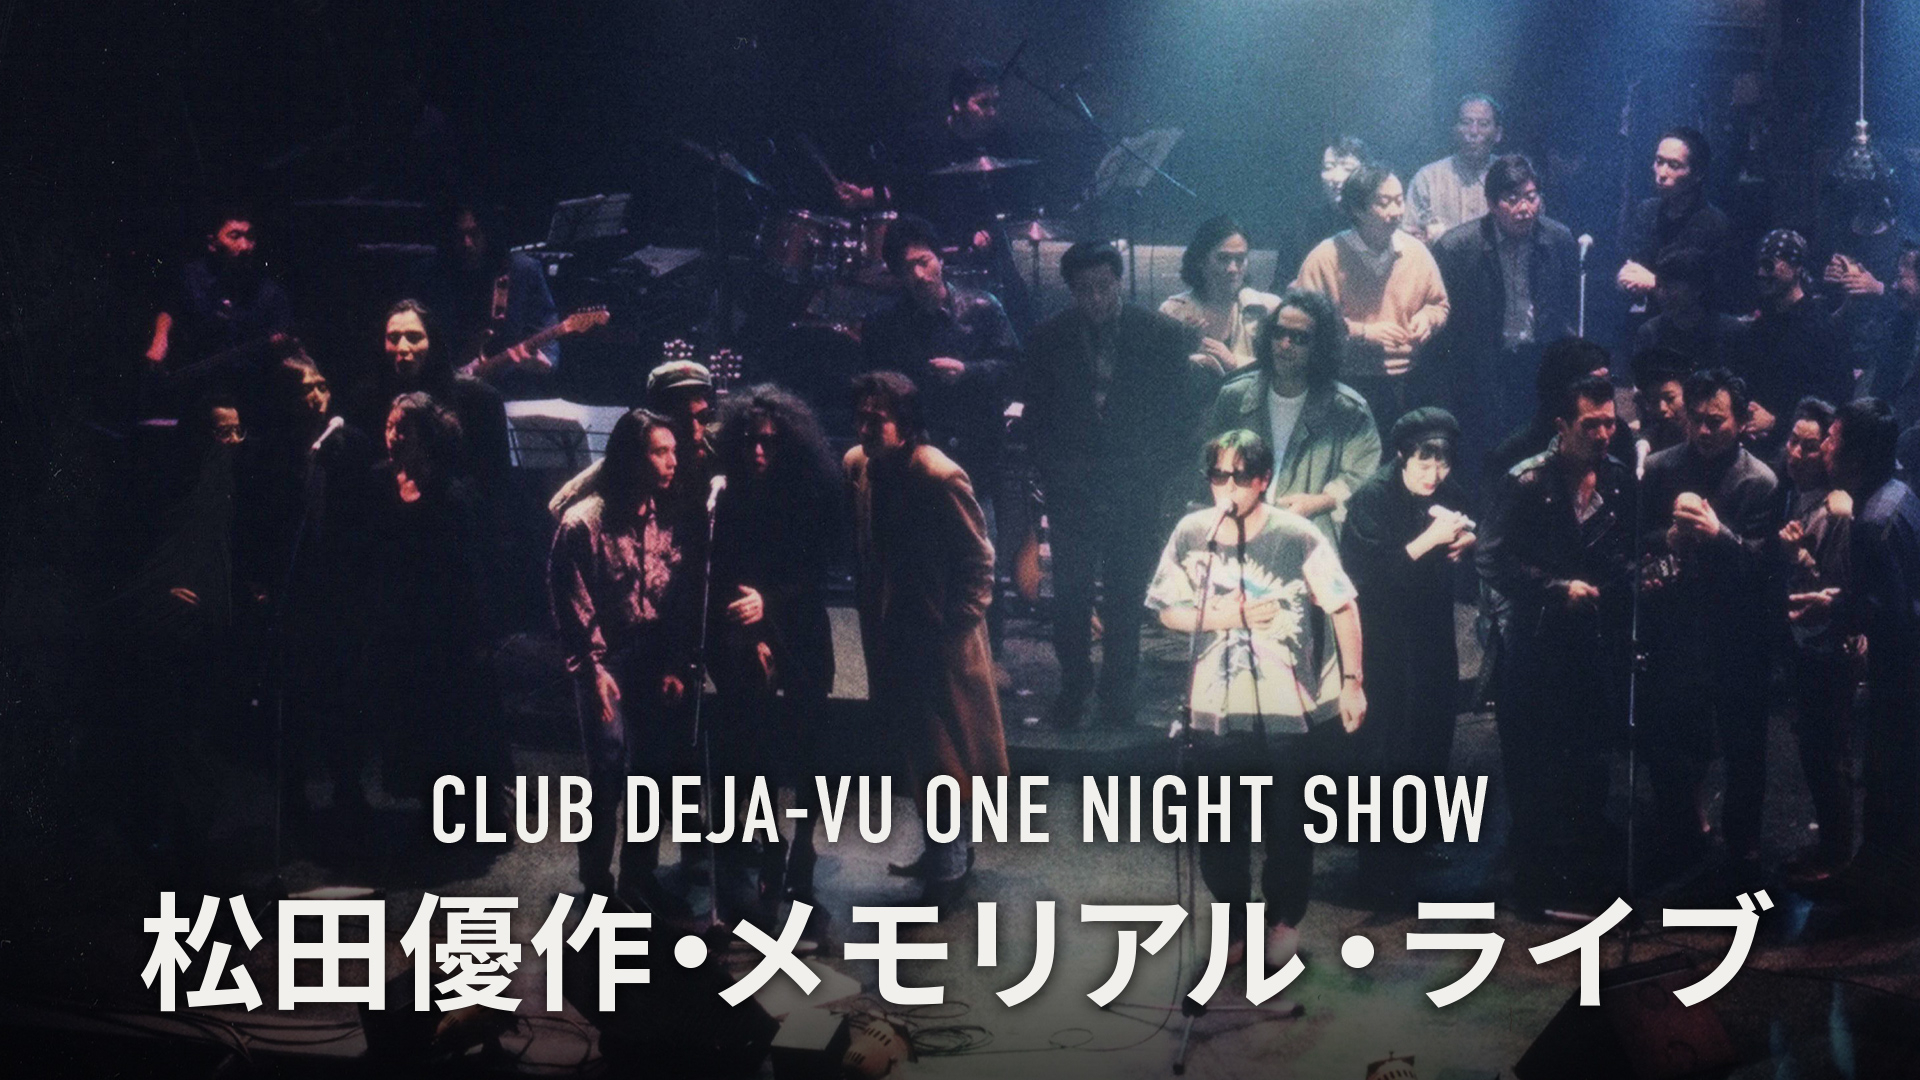 CLUB DEJA-VU ONE NIGHT SHOW 松田優作・メモリアル・ライブ | WOWOW 